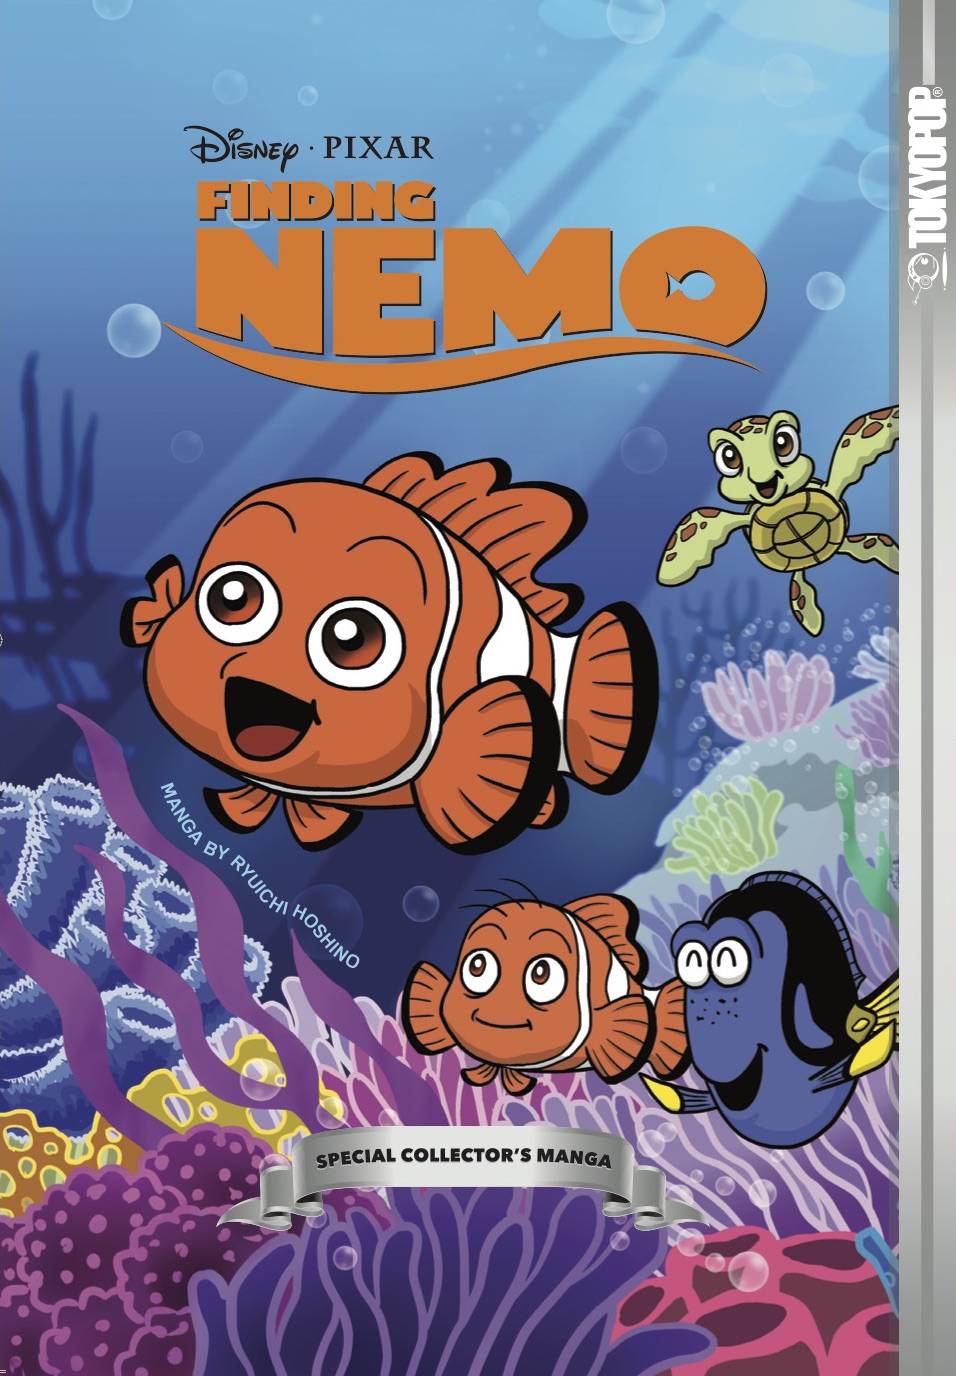 Disney Pixar Finding Nemo Manga Hardcover Special Collector Edition